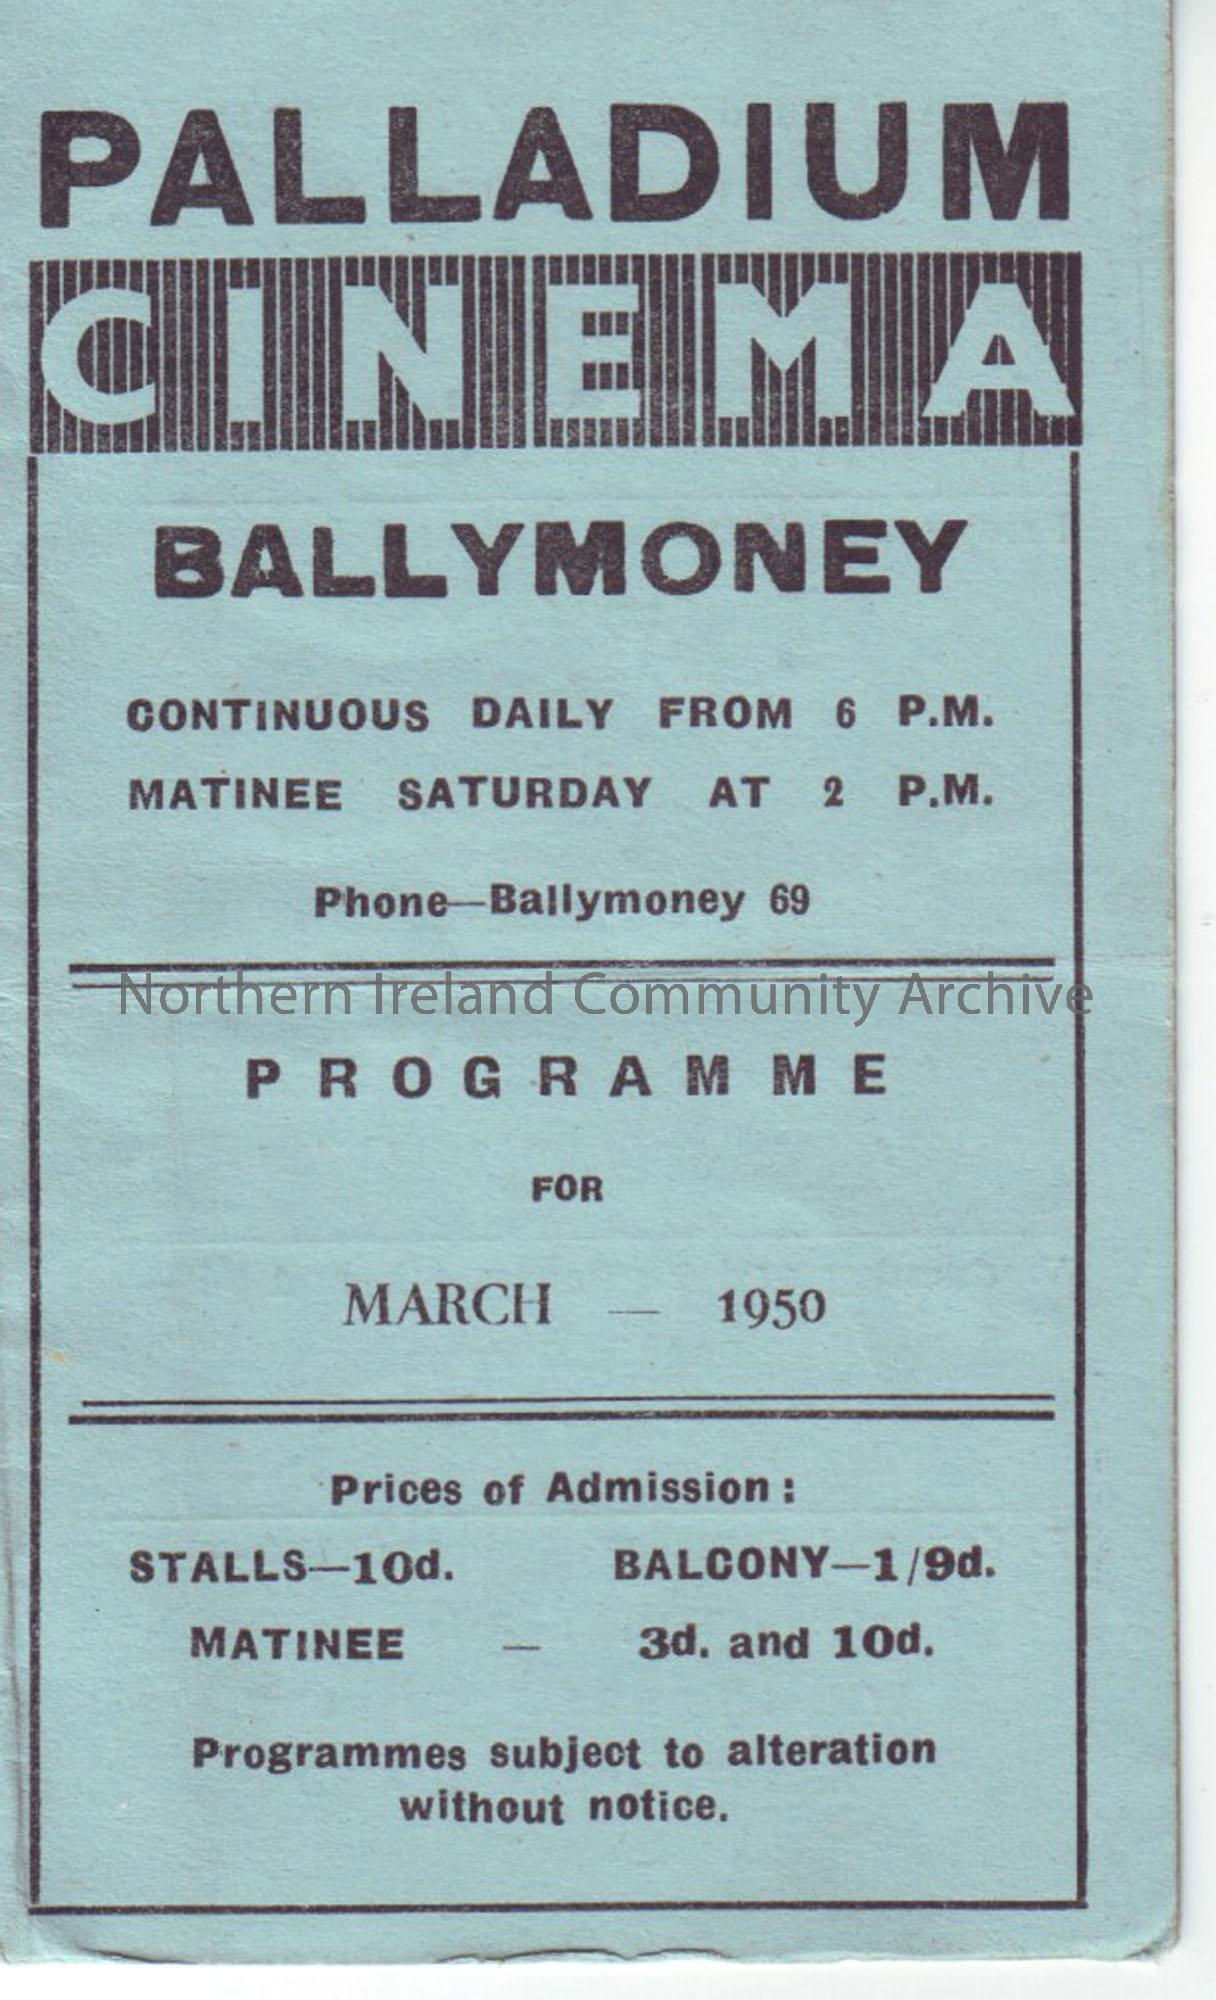 blue monthly programme for Ballymoney Palladium cinema- March 1950